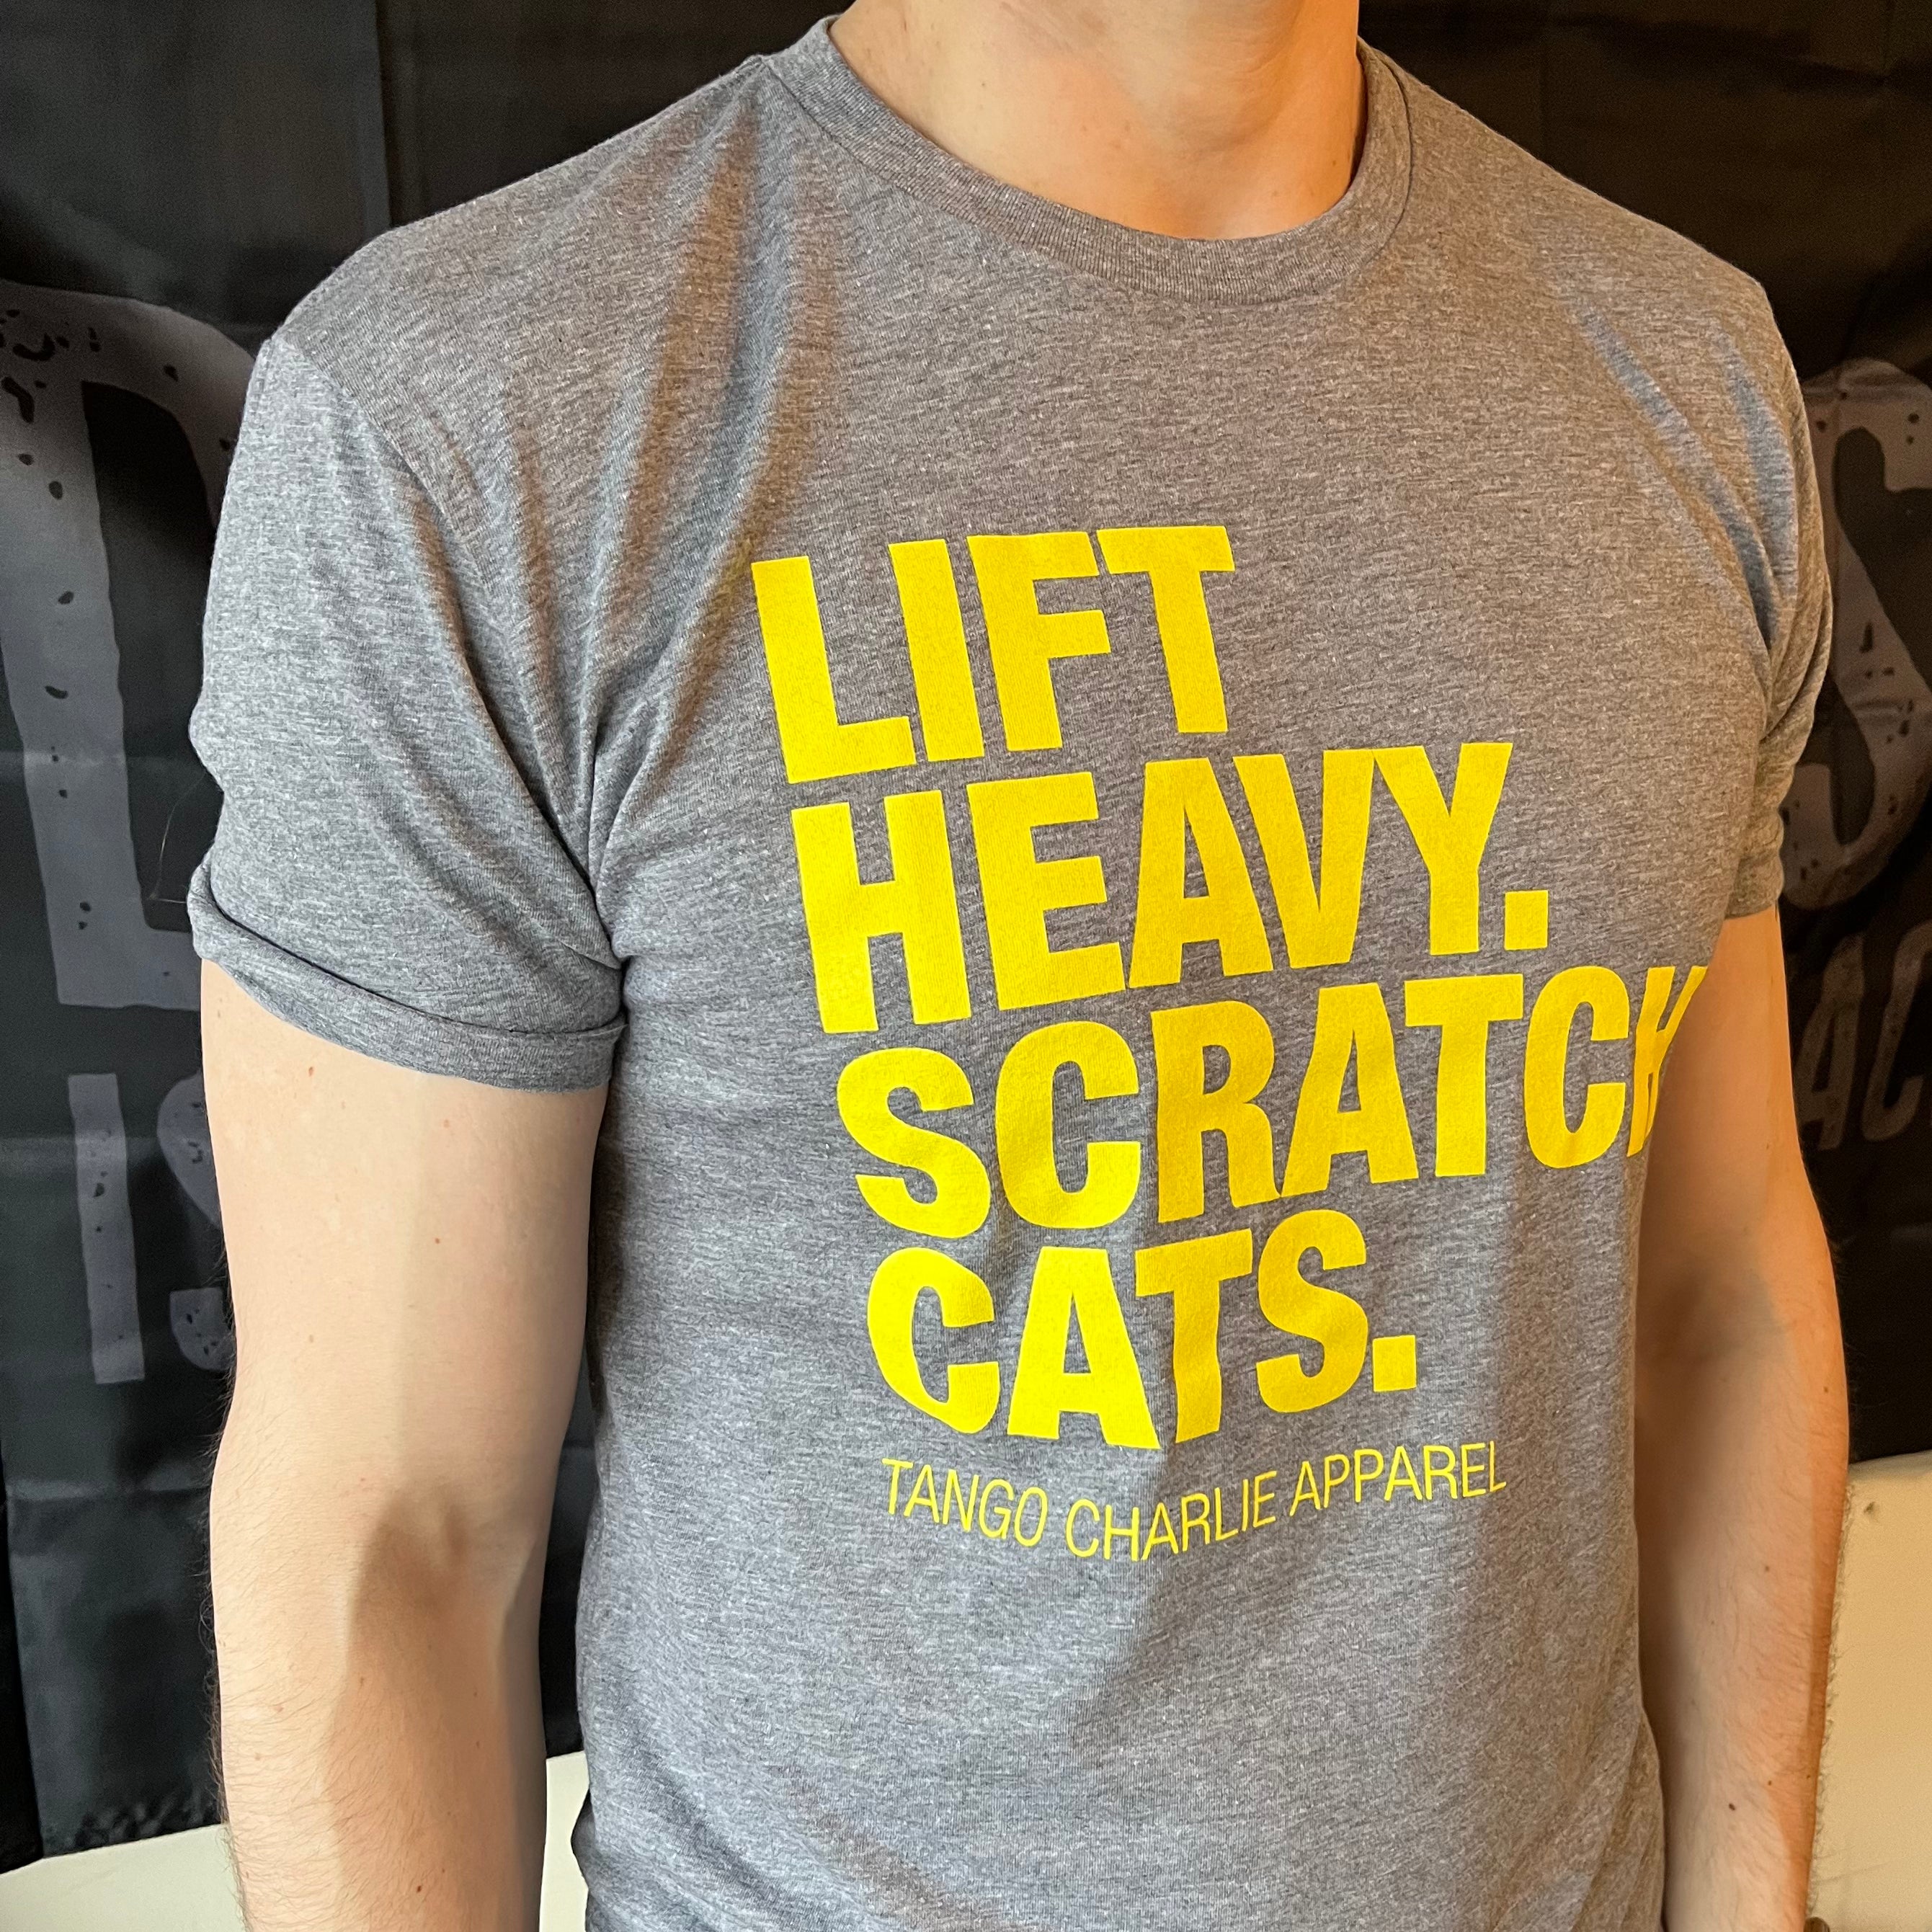 Lift Heavy. Scratch Cats. - Tee